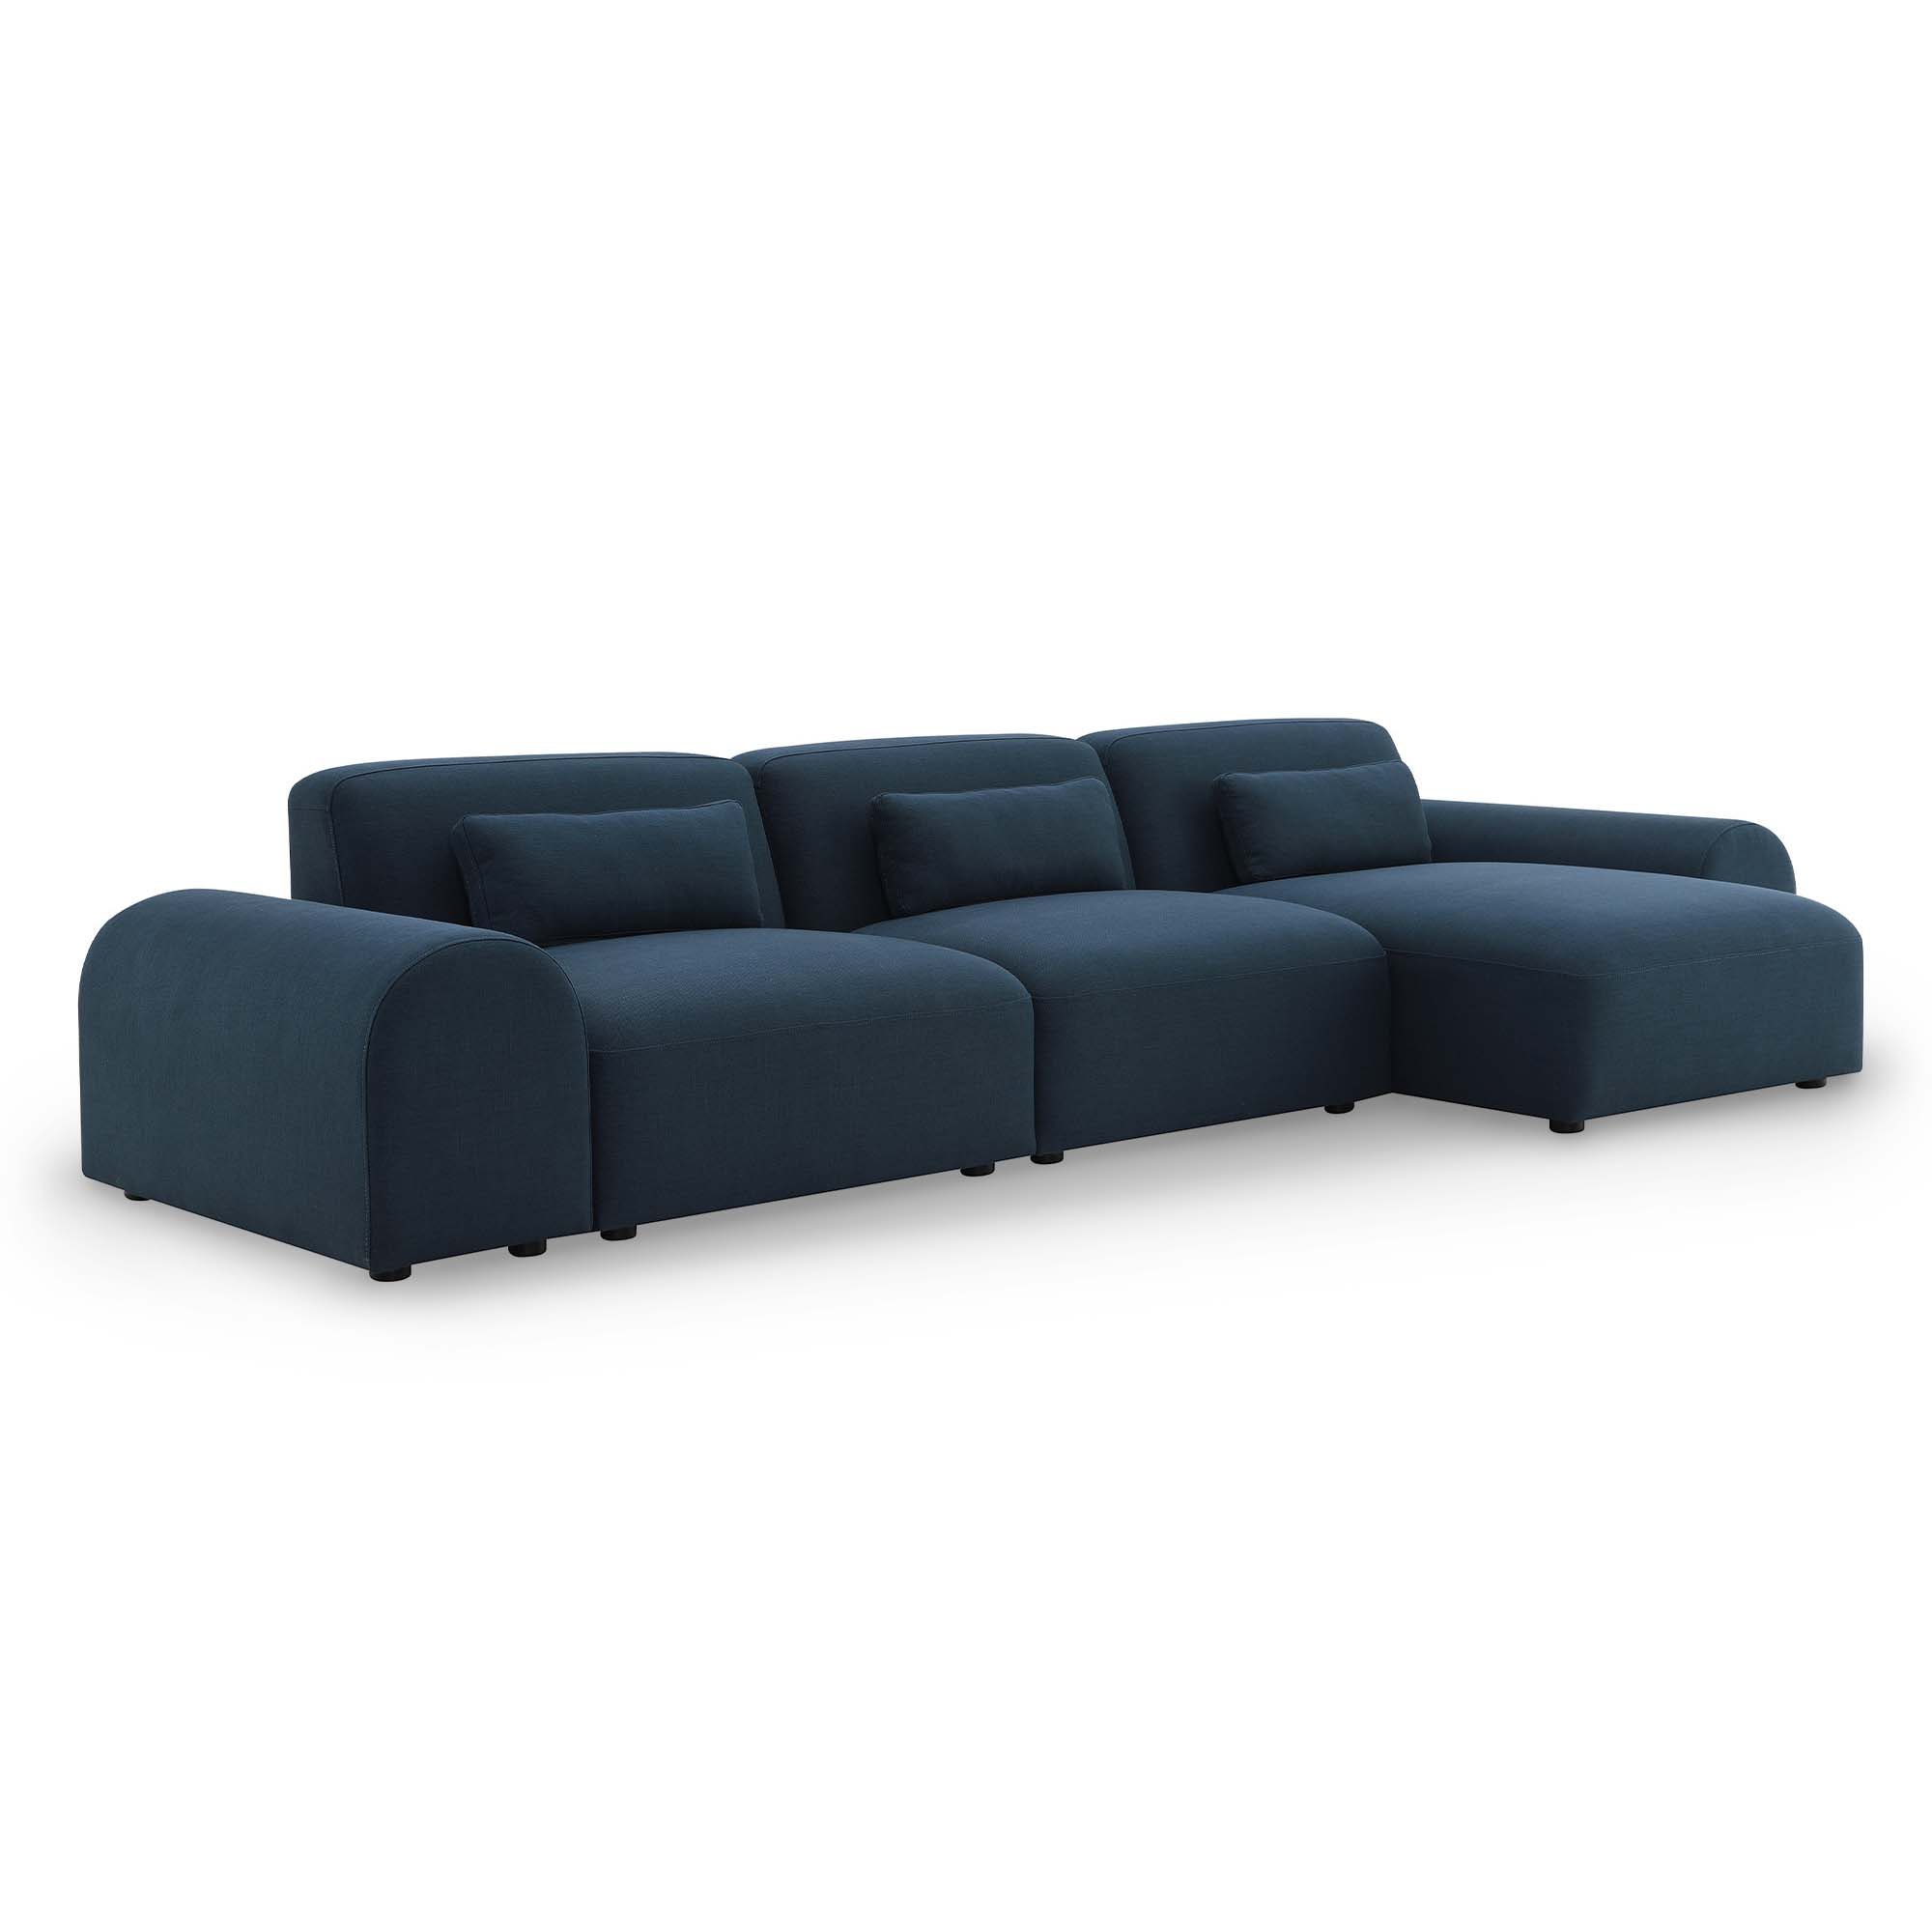 Canapé contemporain d'angle réversible en tissu bleu